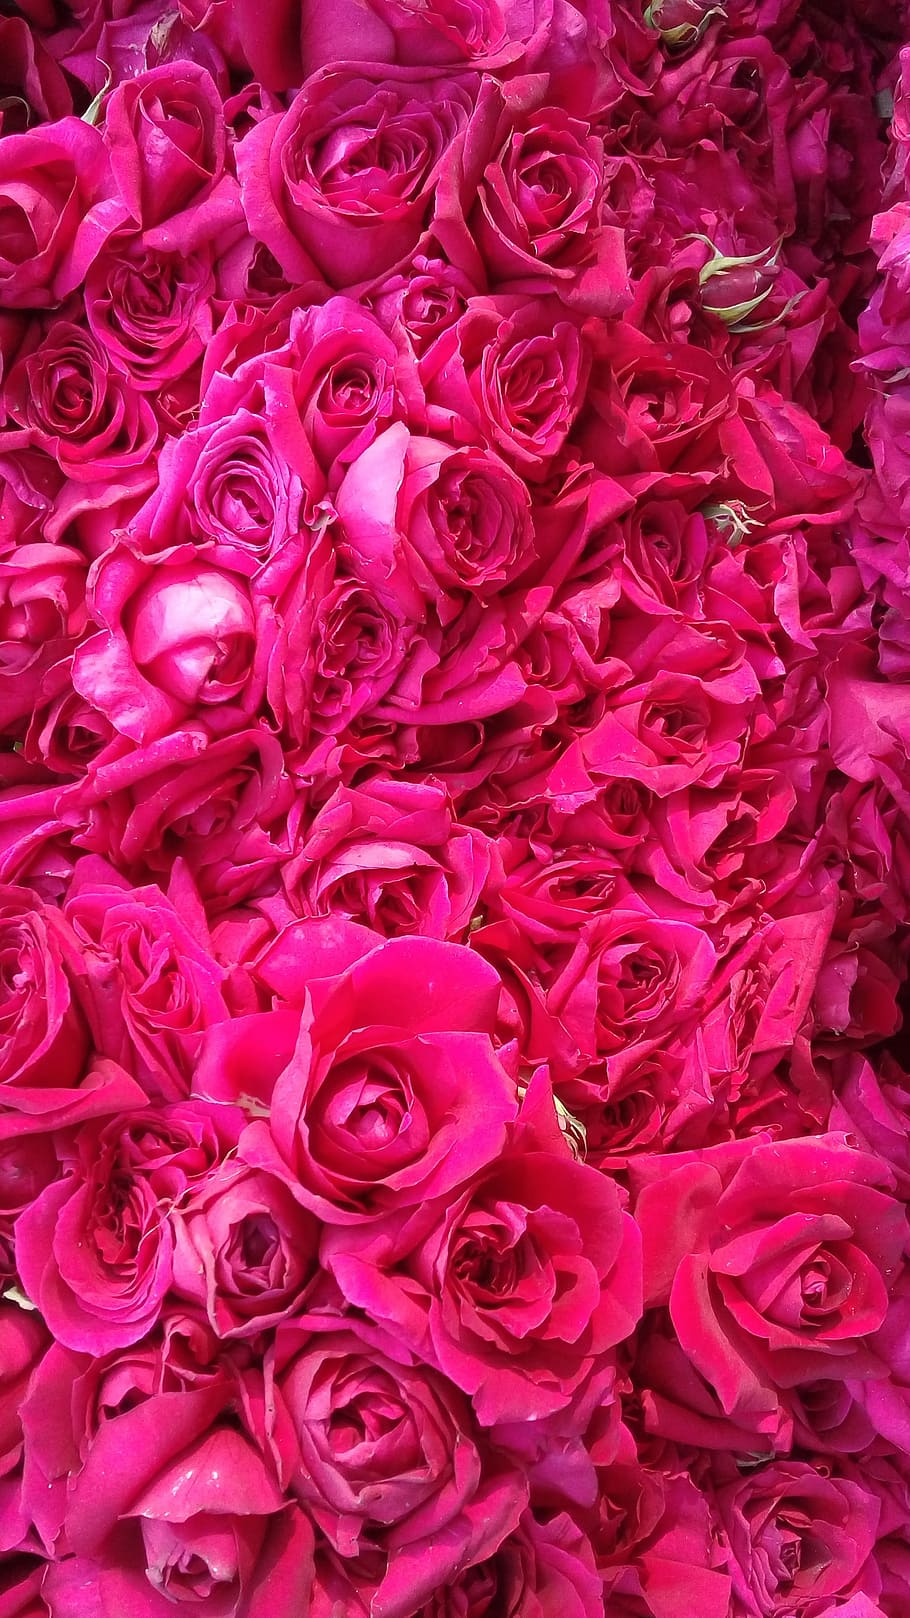 mawar, bunga, daun bunga, warna, bingkai penuh, latar belakang, mawar - bunga, warna pink, keindahan di alam, close-up